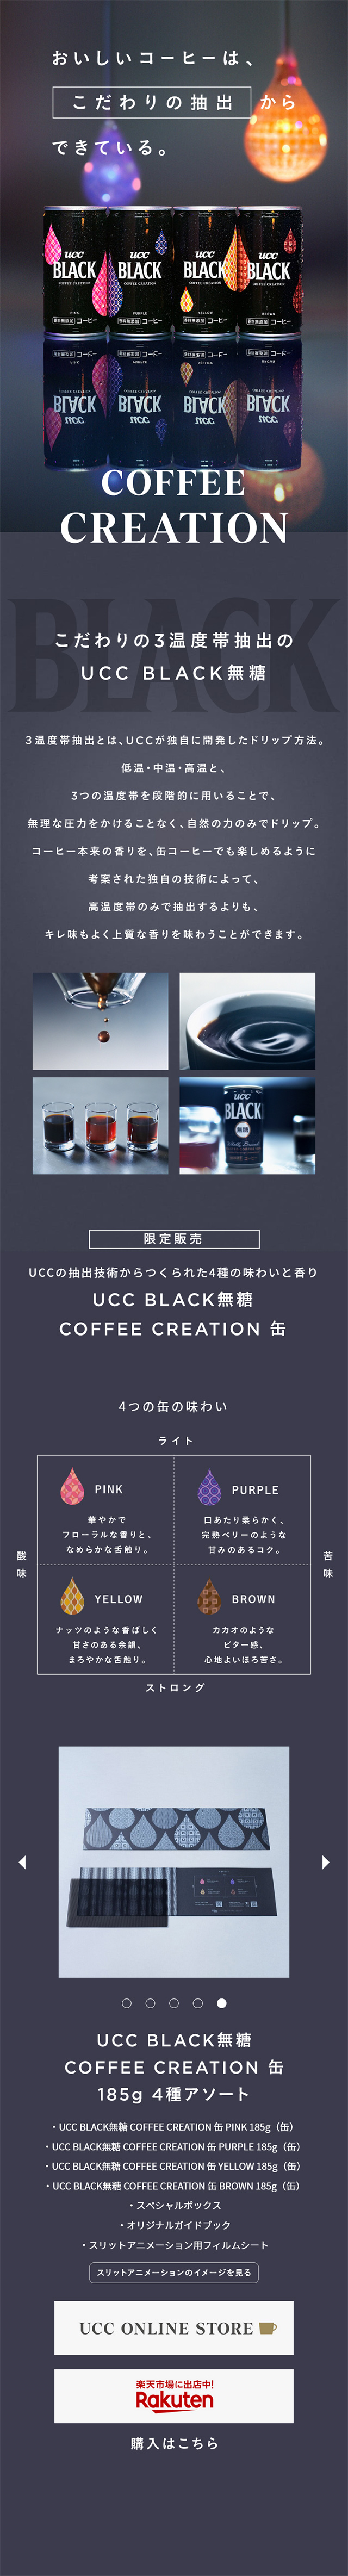 UCC COFFEE CREATION 抽出篇「UCC BLACK無糖」 特設サイト_sp_1